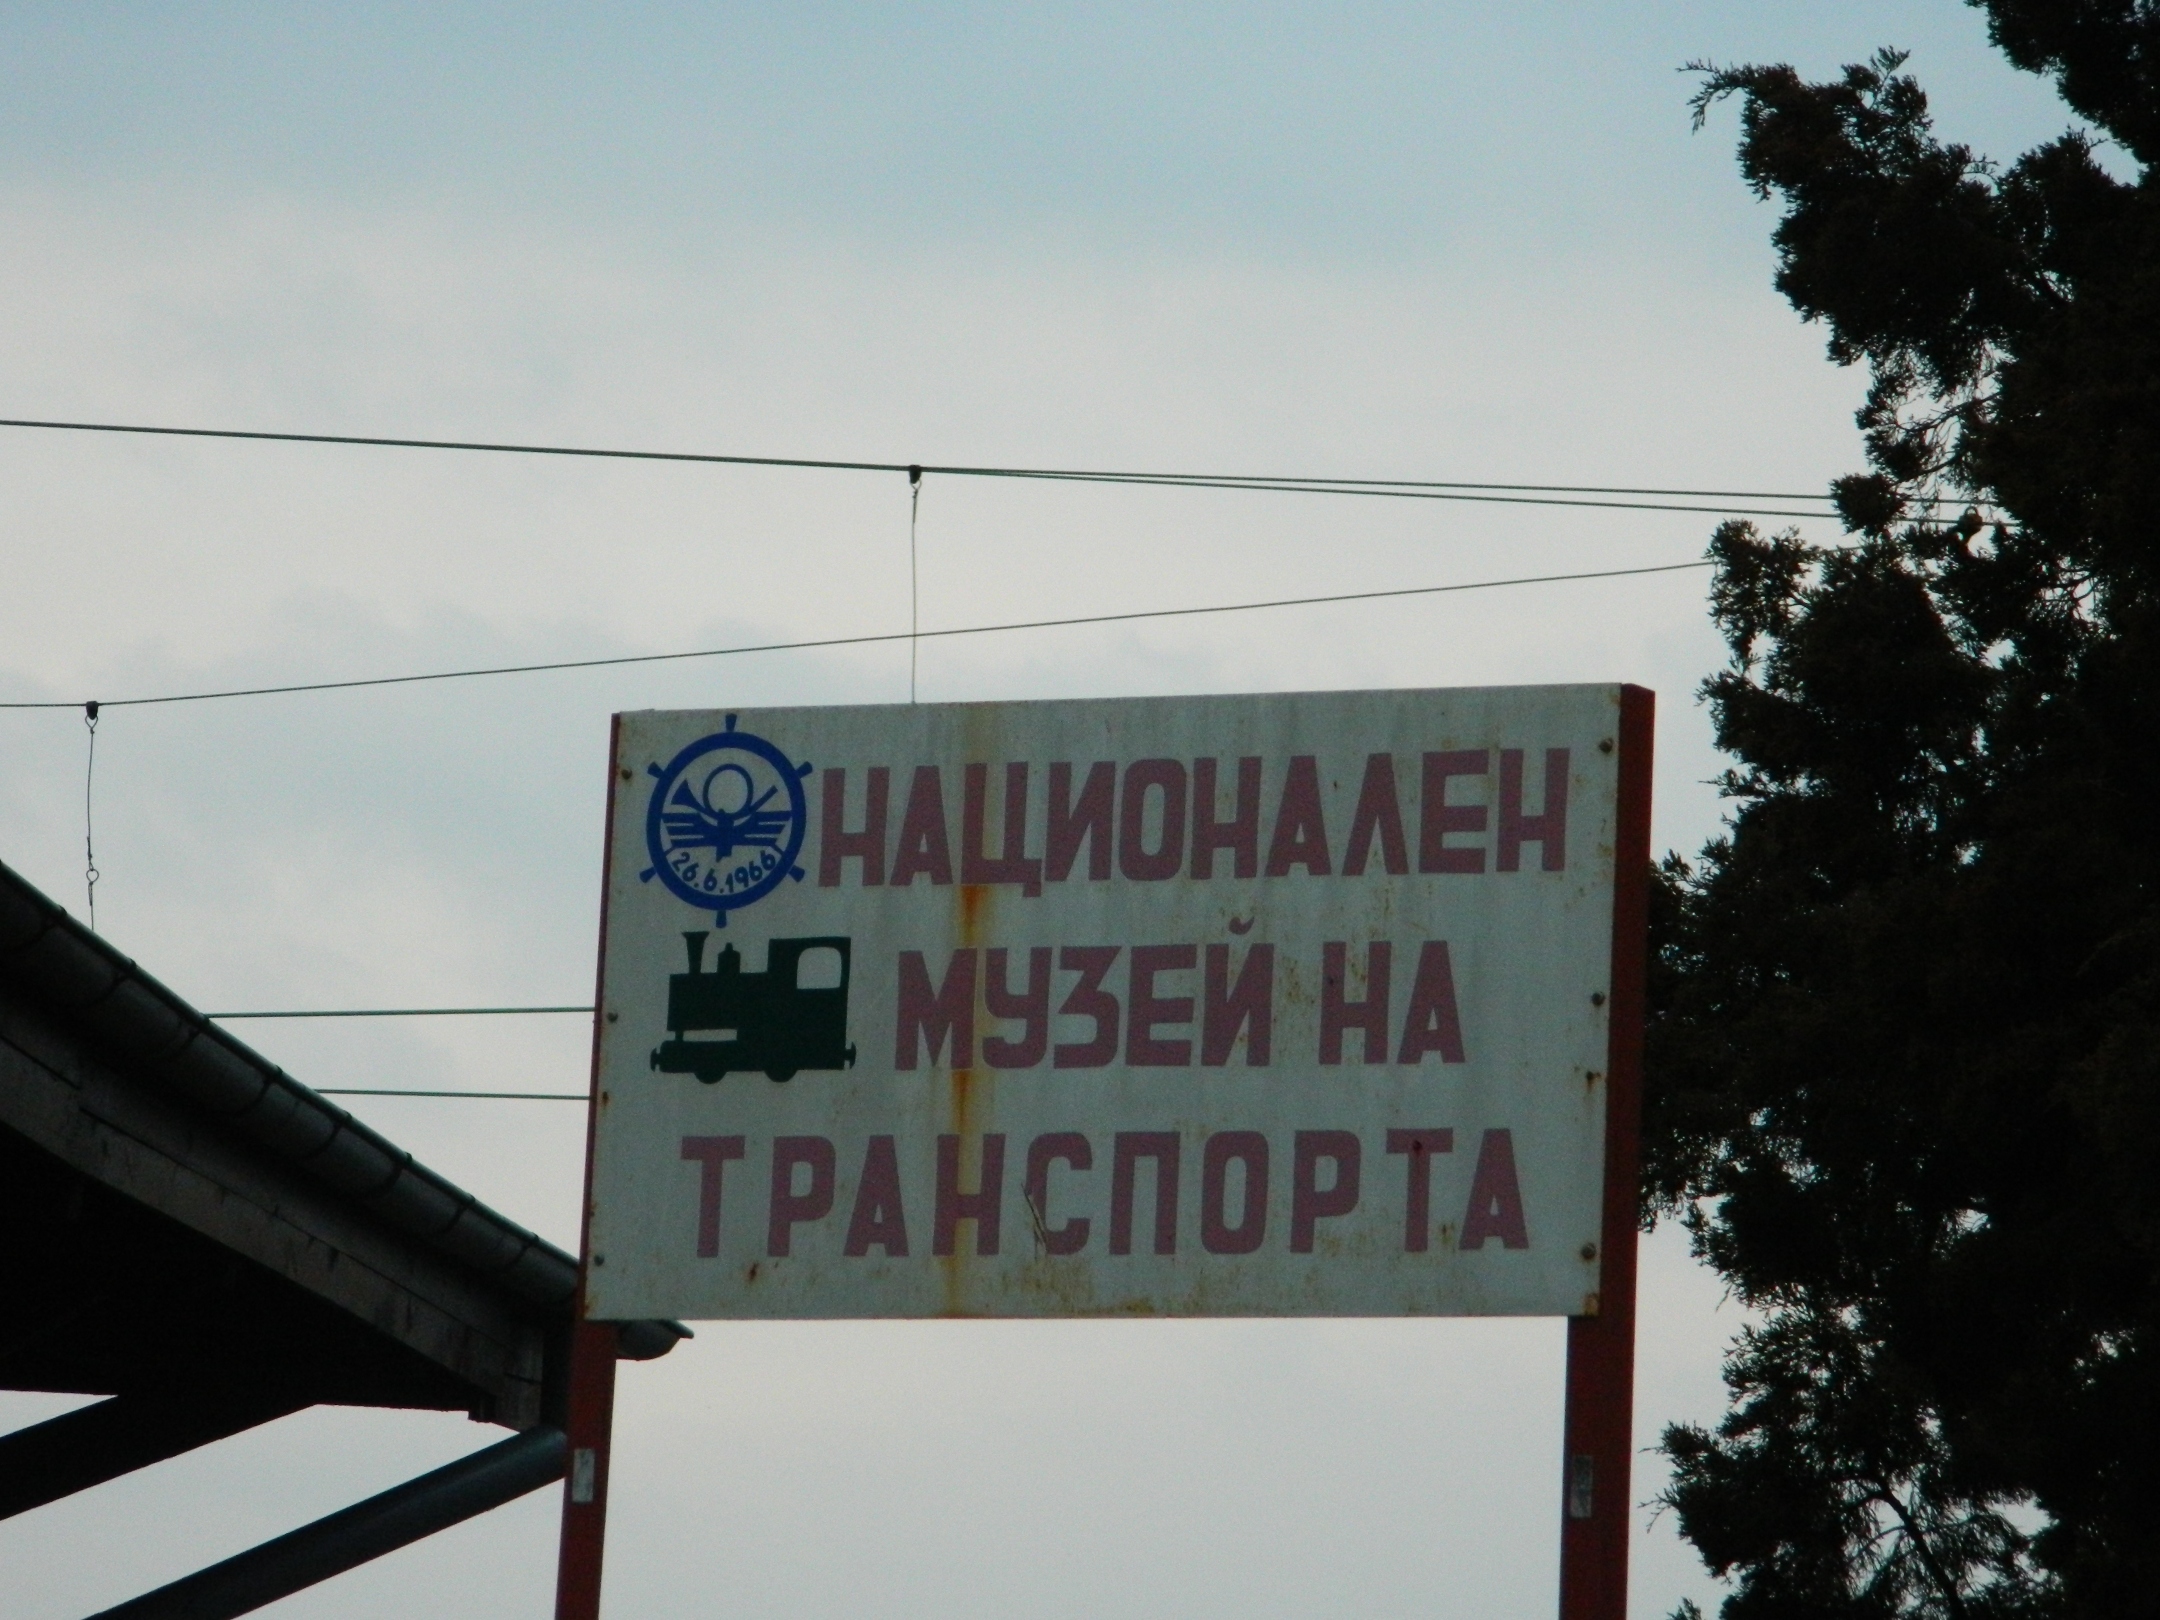 Sign in bulgarian language photo